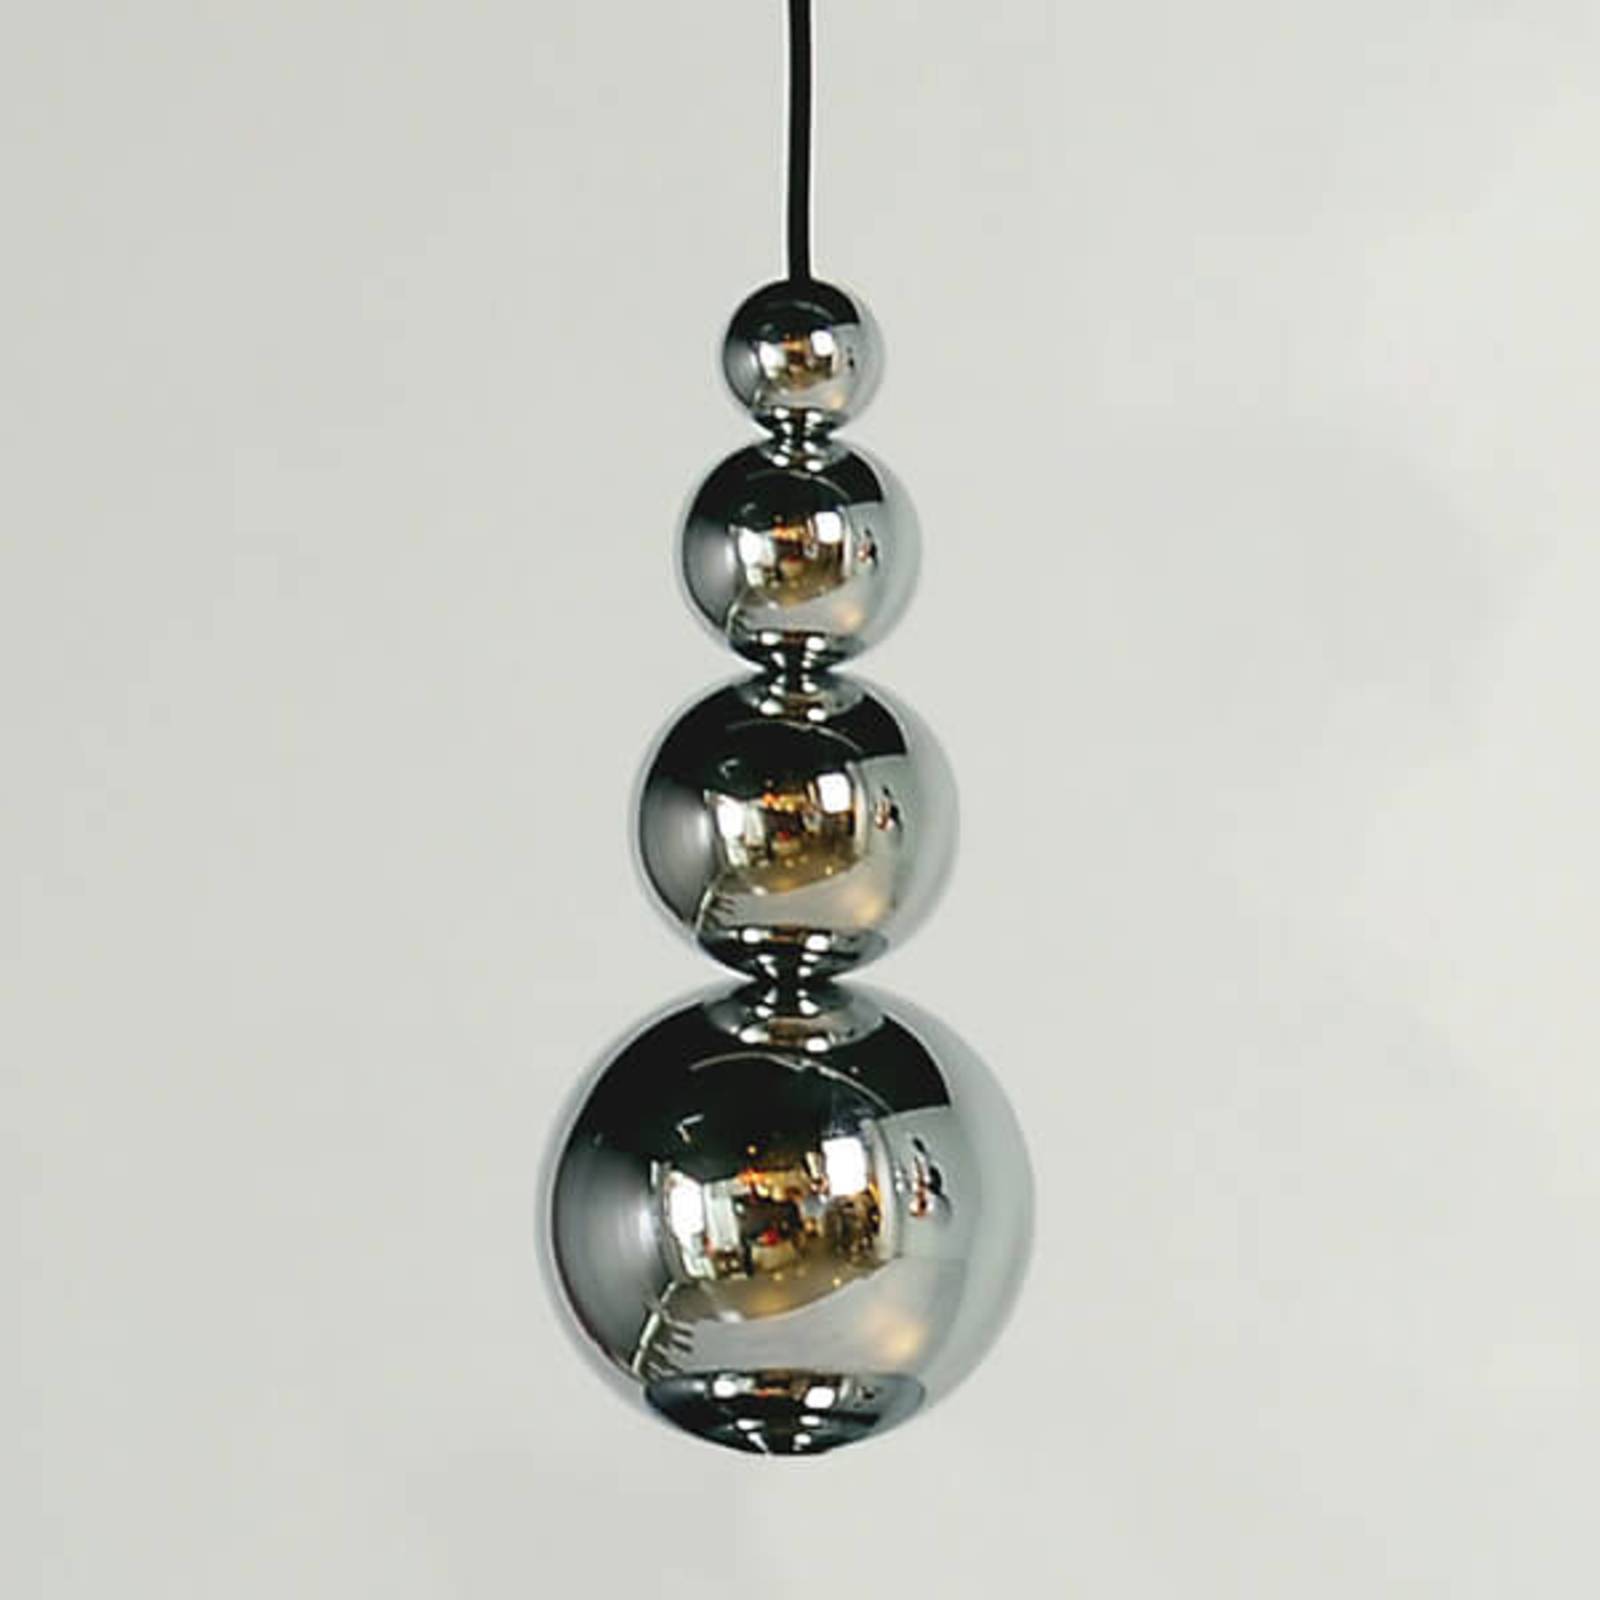 Innermost Bubble - hanglamp in chroom